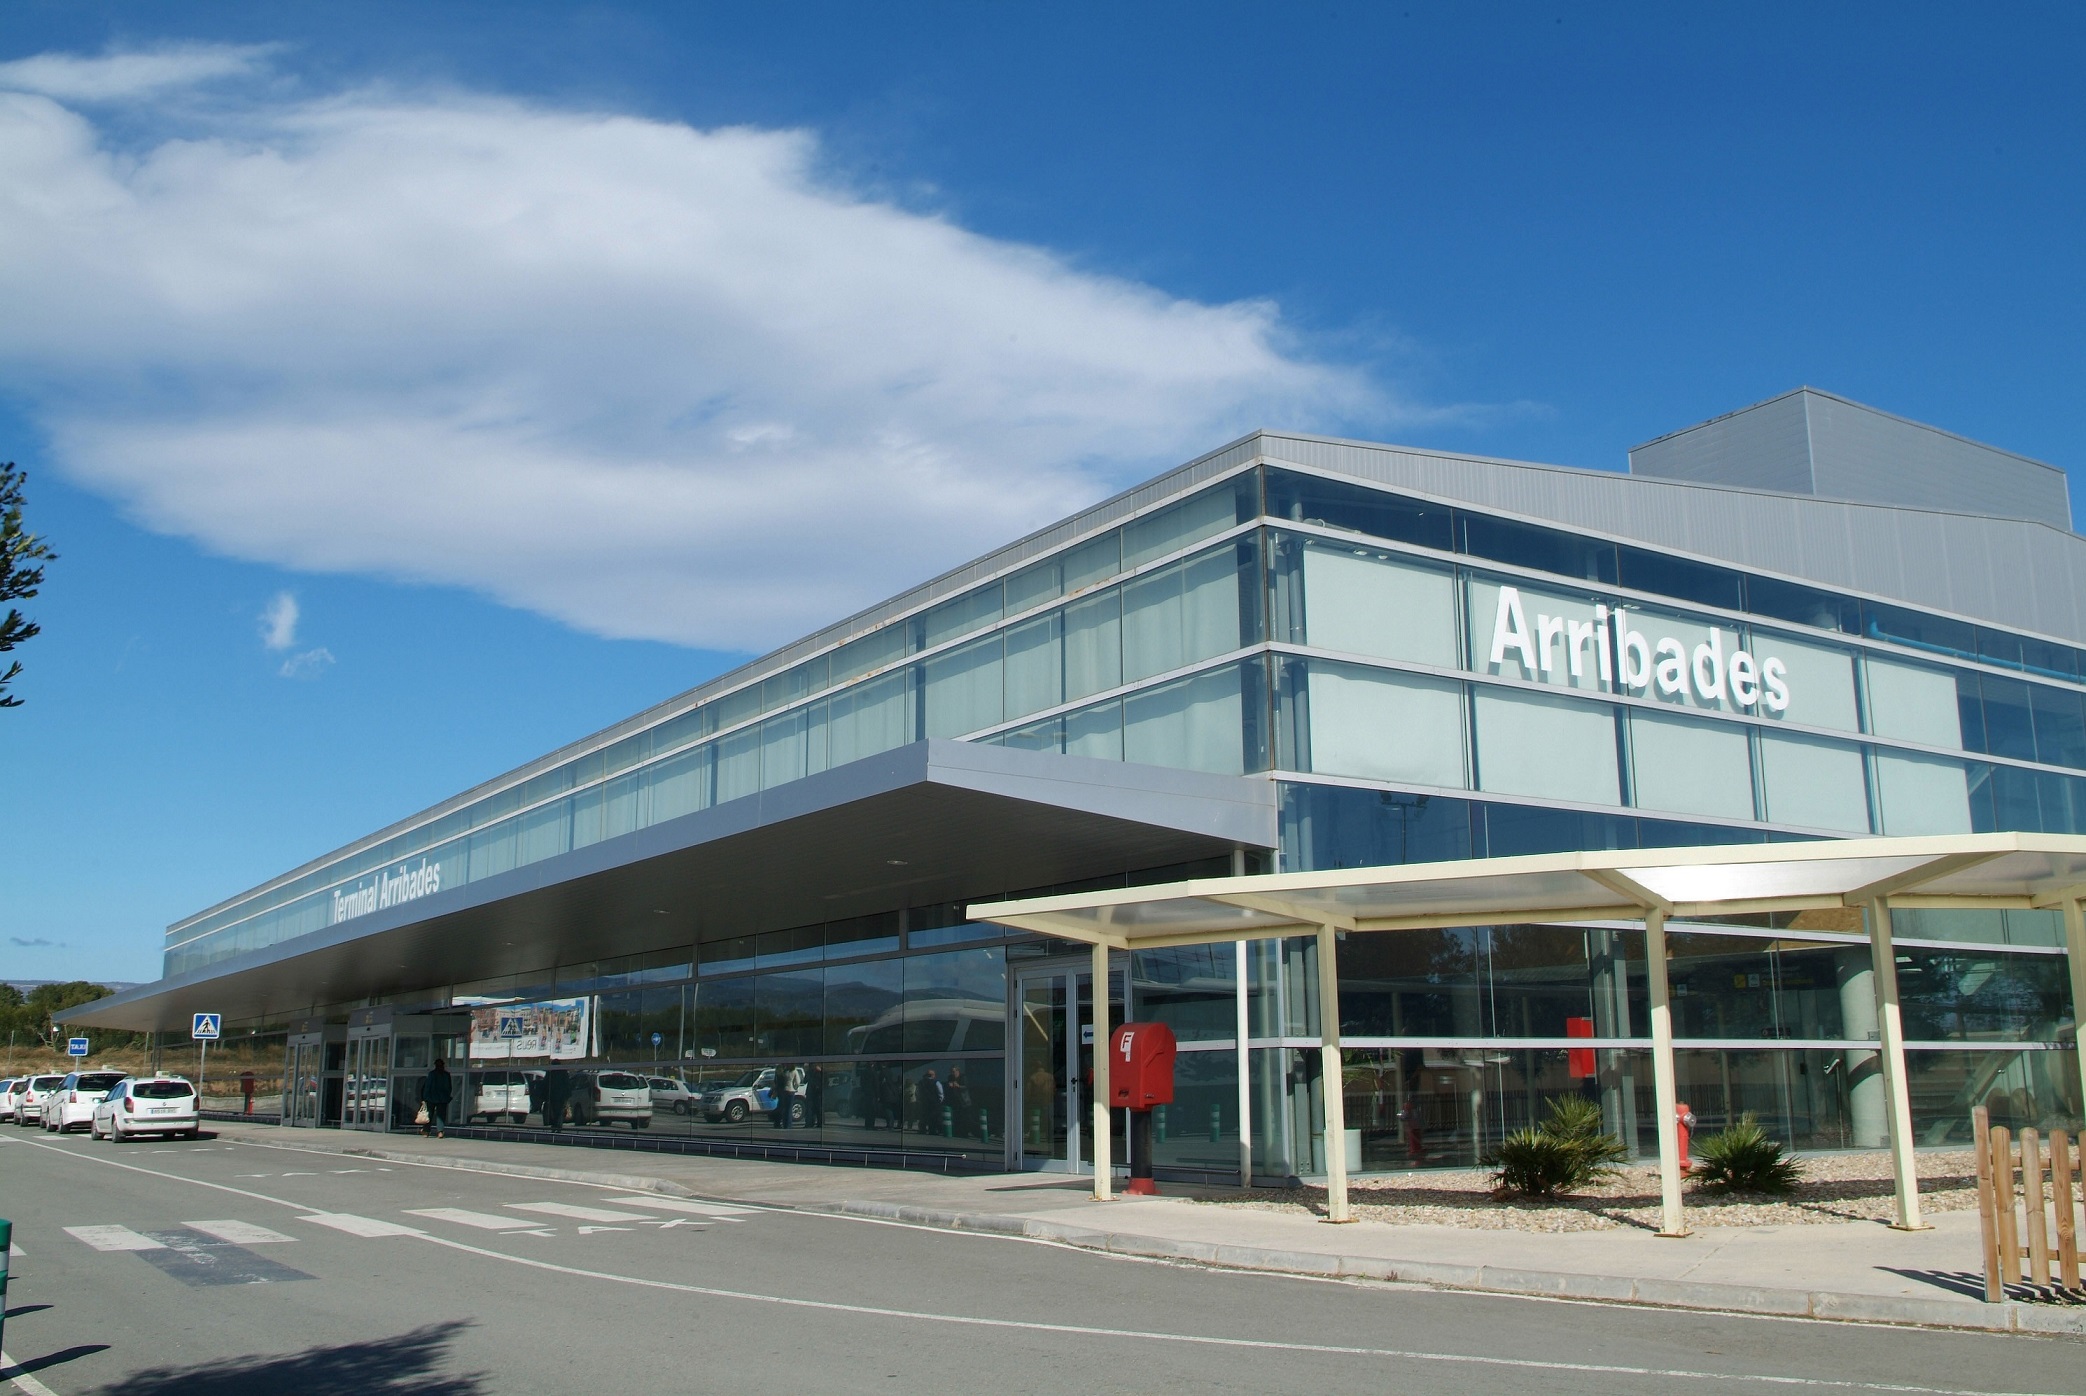 Aeroport de Reus